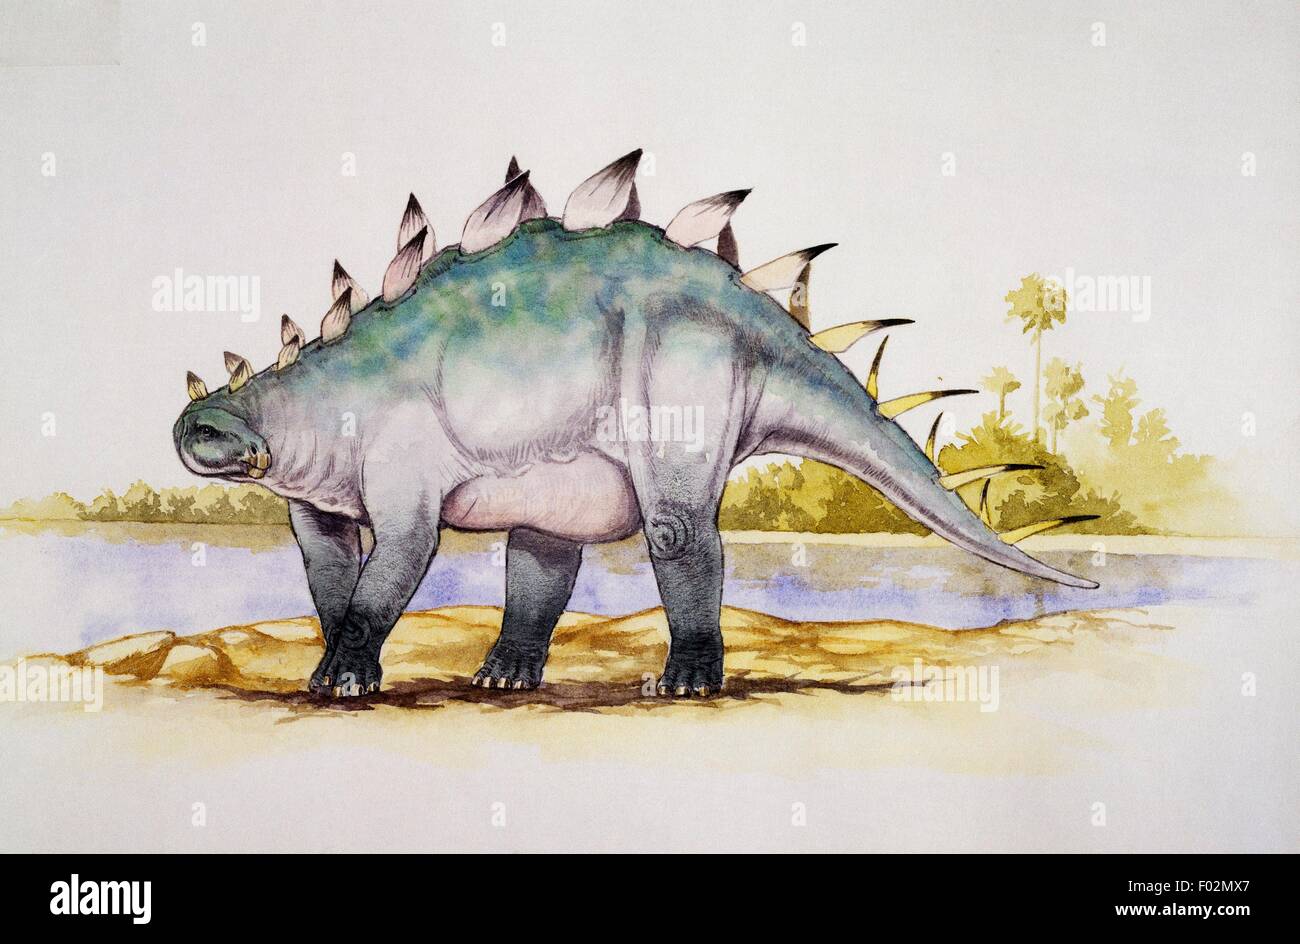 Dacentrurus armatus, Stegosauridae, Late Jurassic. Illustrazione. Foto Stock